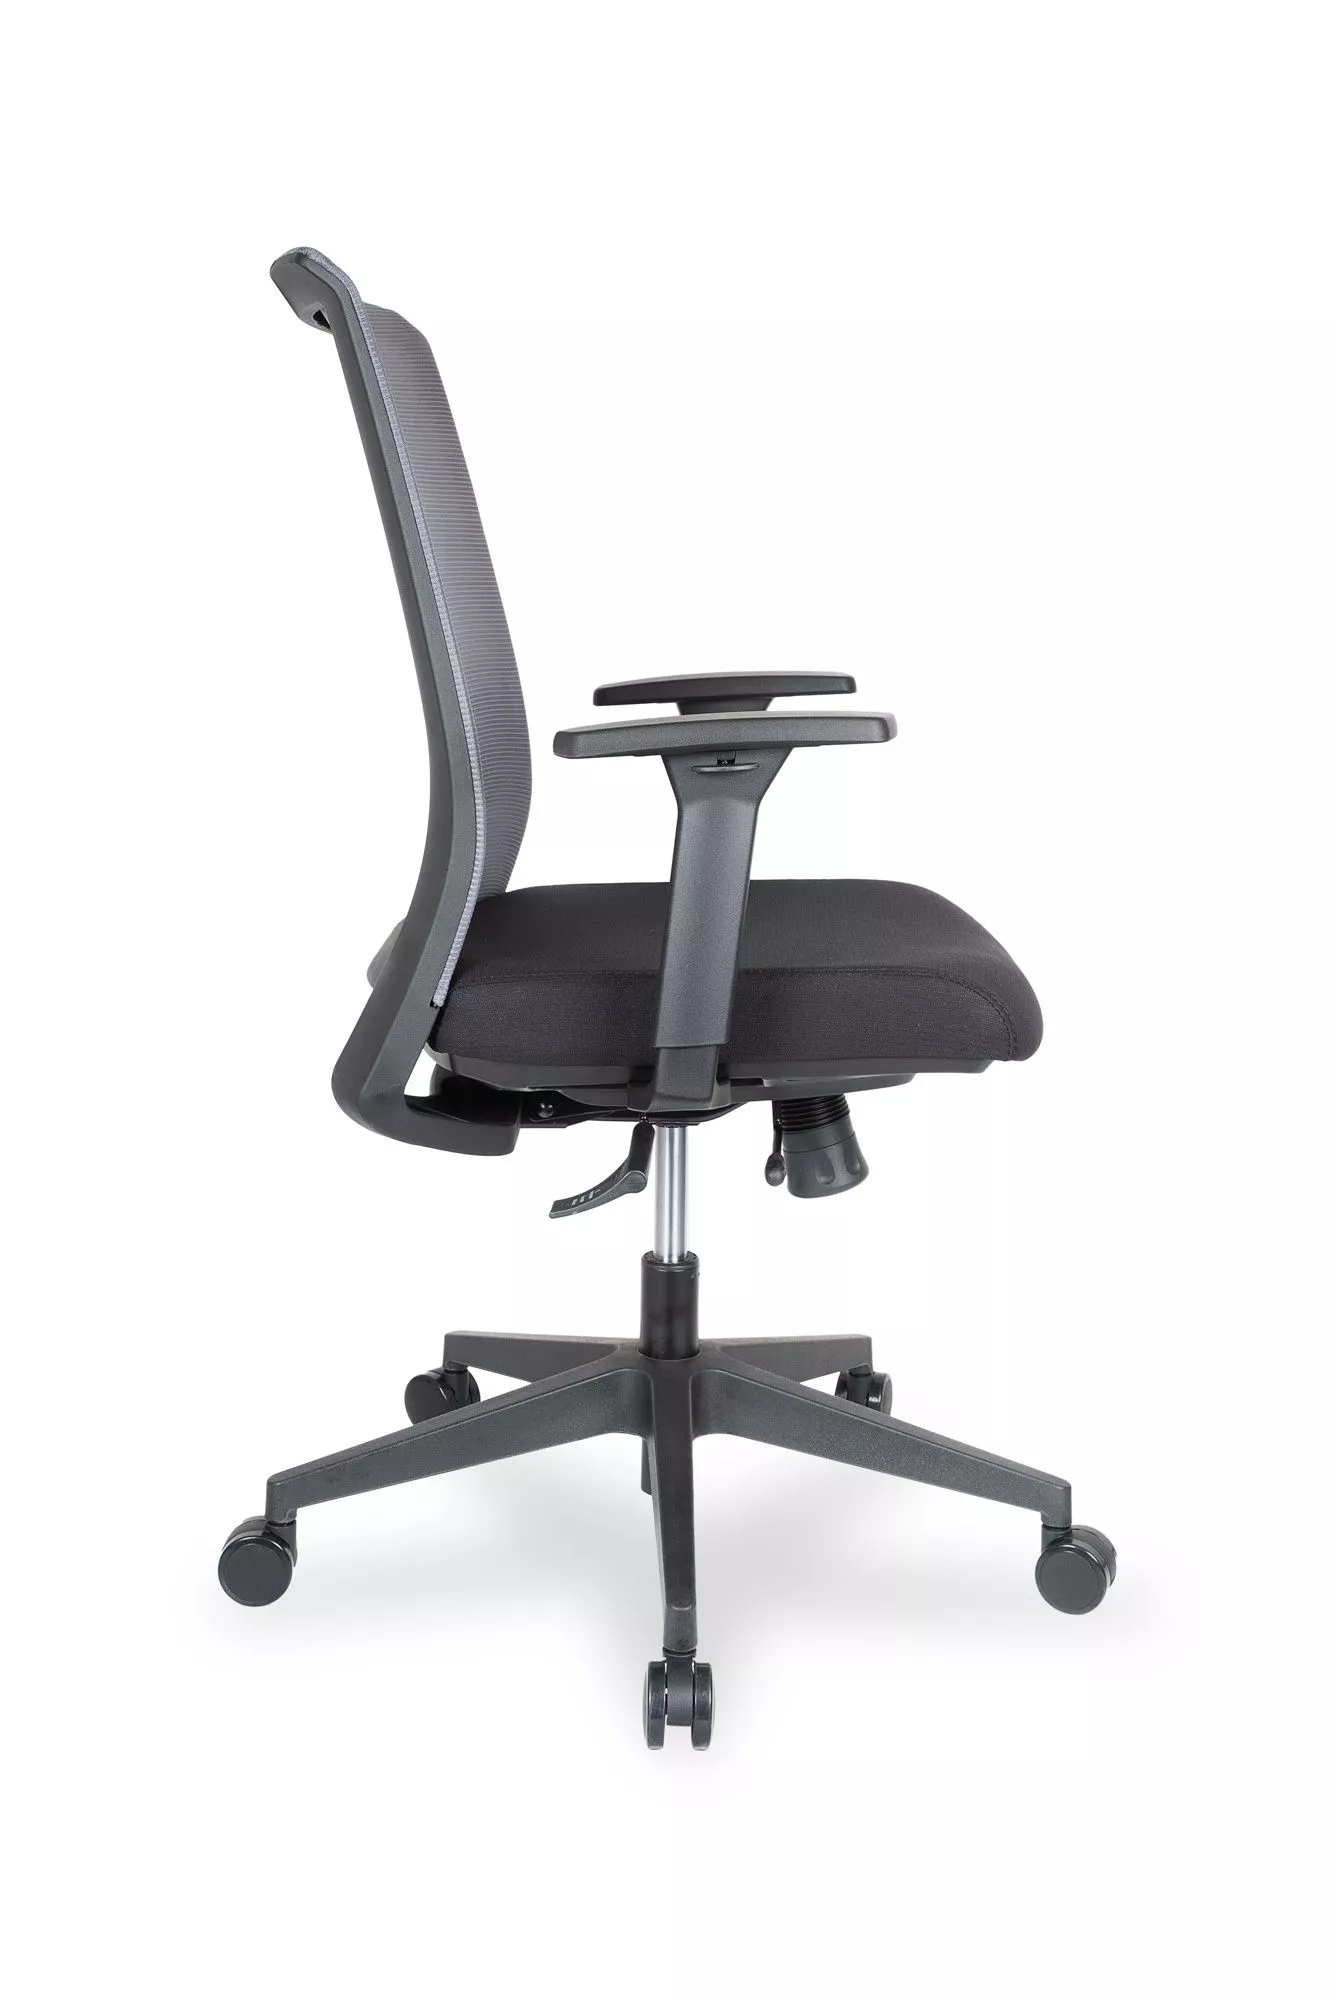 Компьютерное кресло College CLG-429 MBN-B Серый